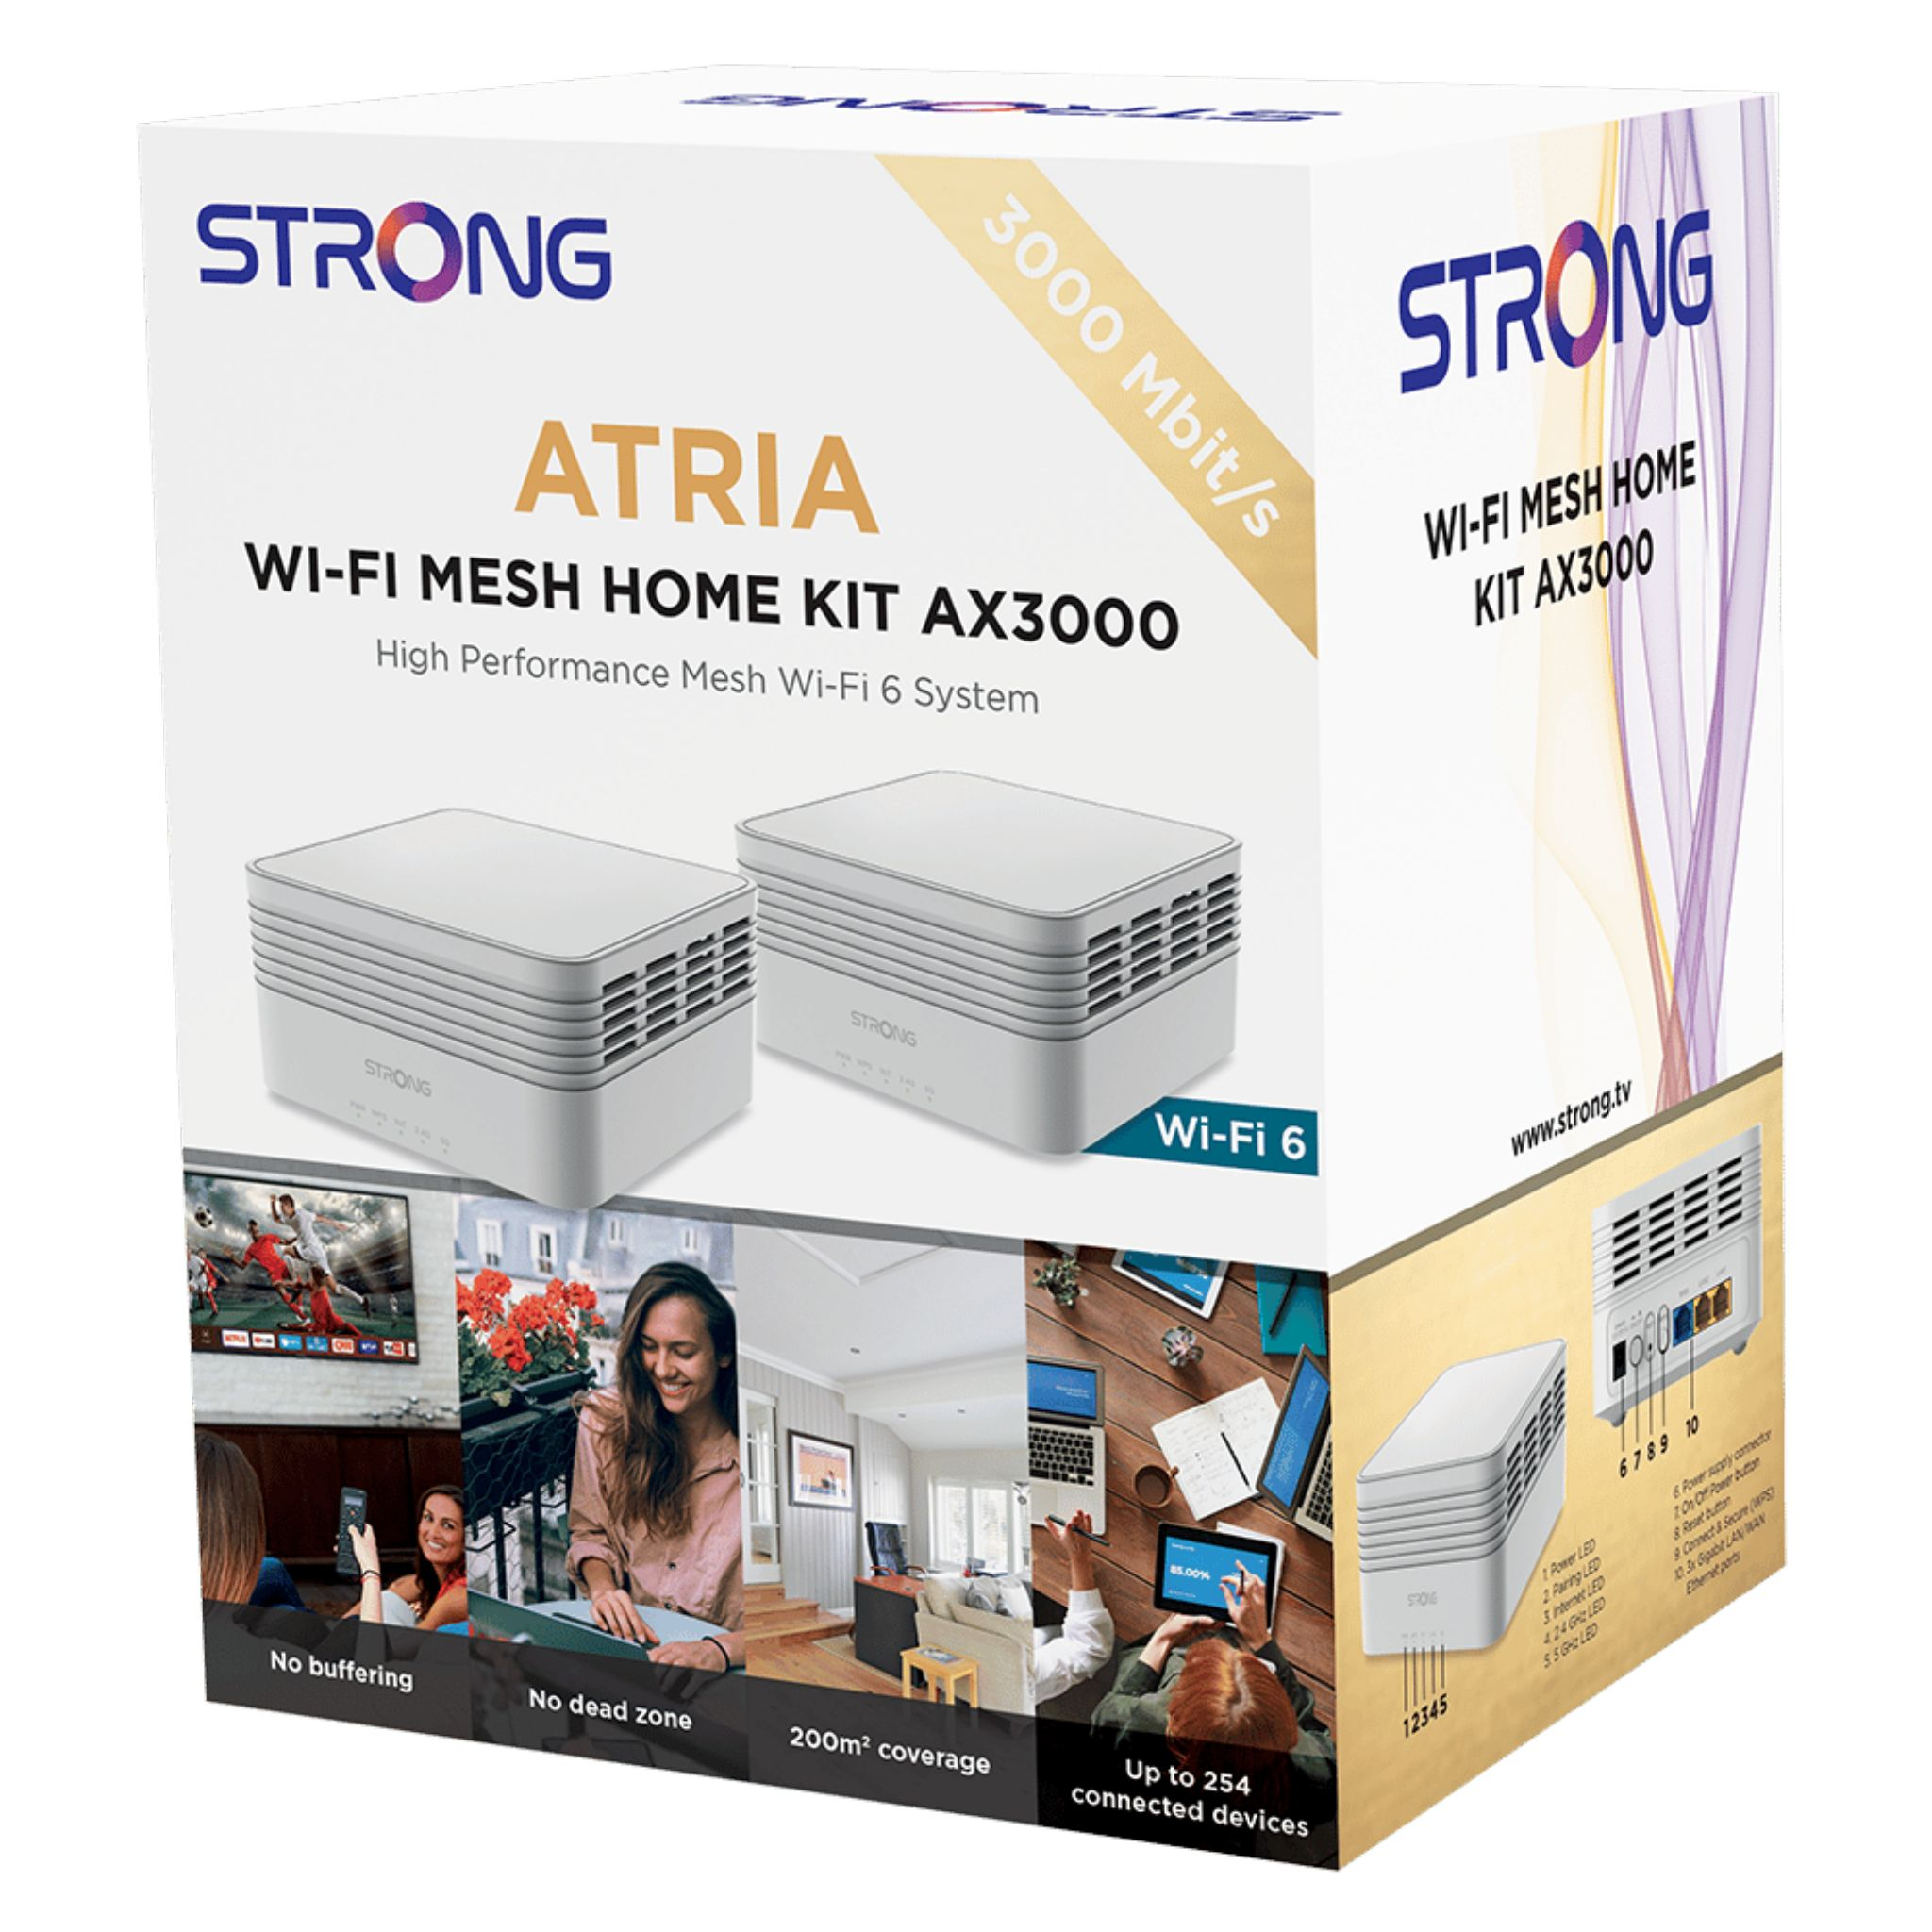 STRONG Atria Wi-Fi Mesh Home WLAN AX3000 Point Kit Access